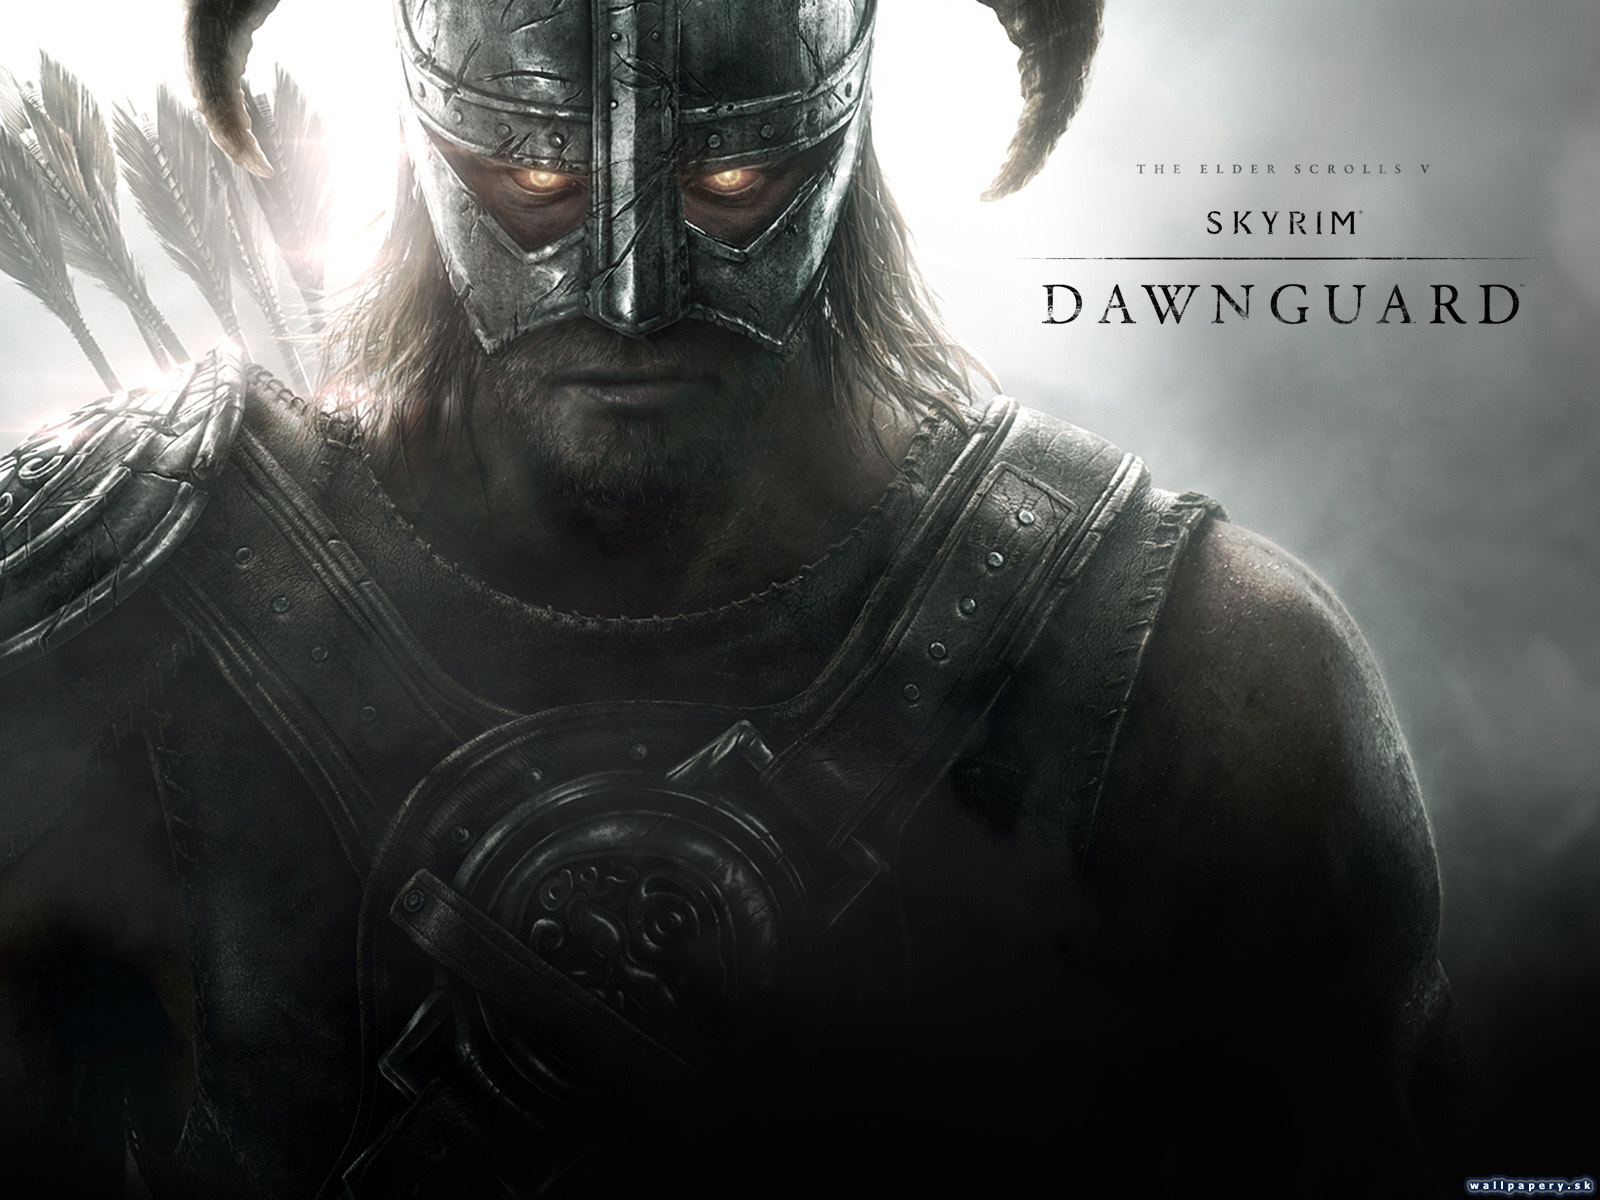 The Elder Scrolls V: Skyrim - Dawnguard - wallpaper 1